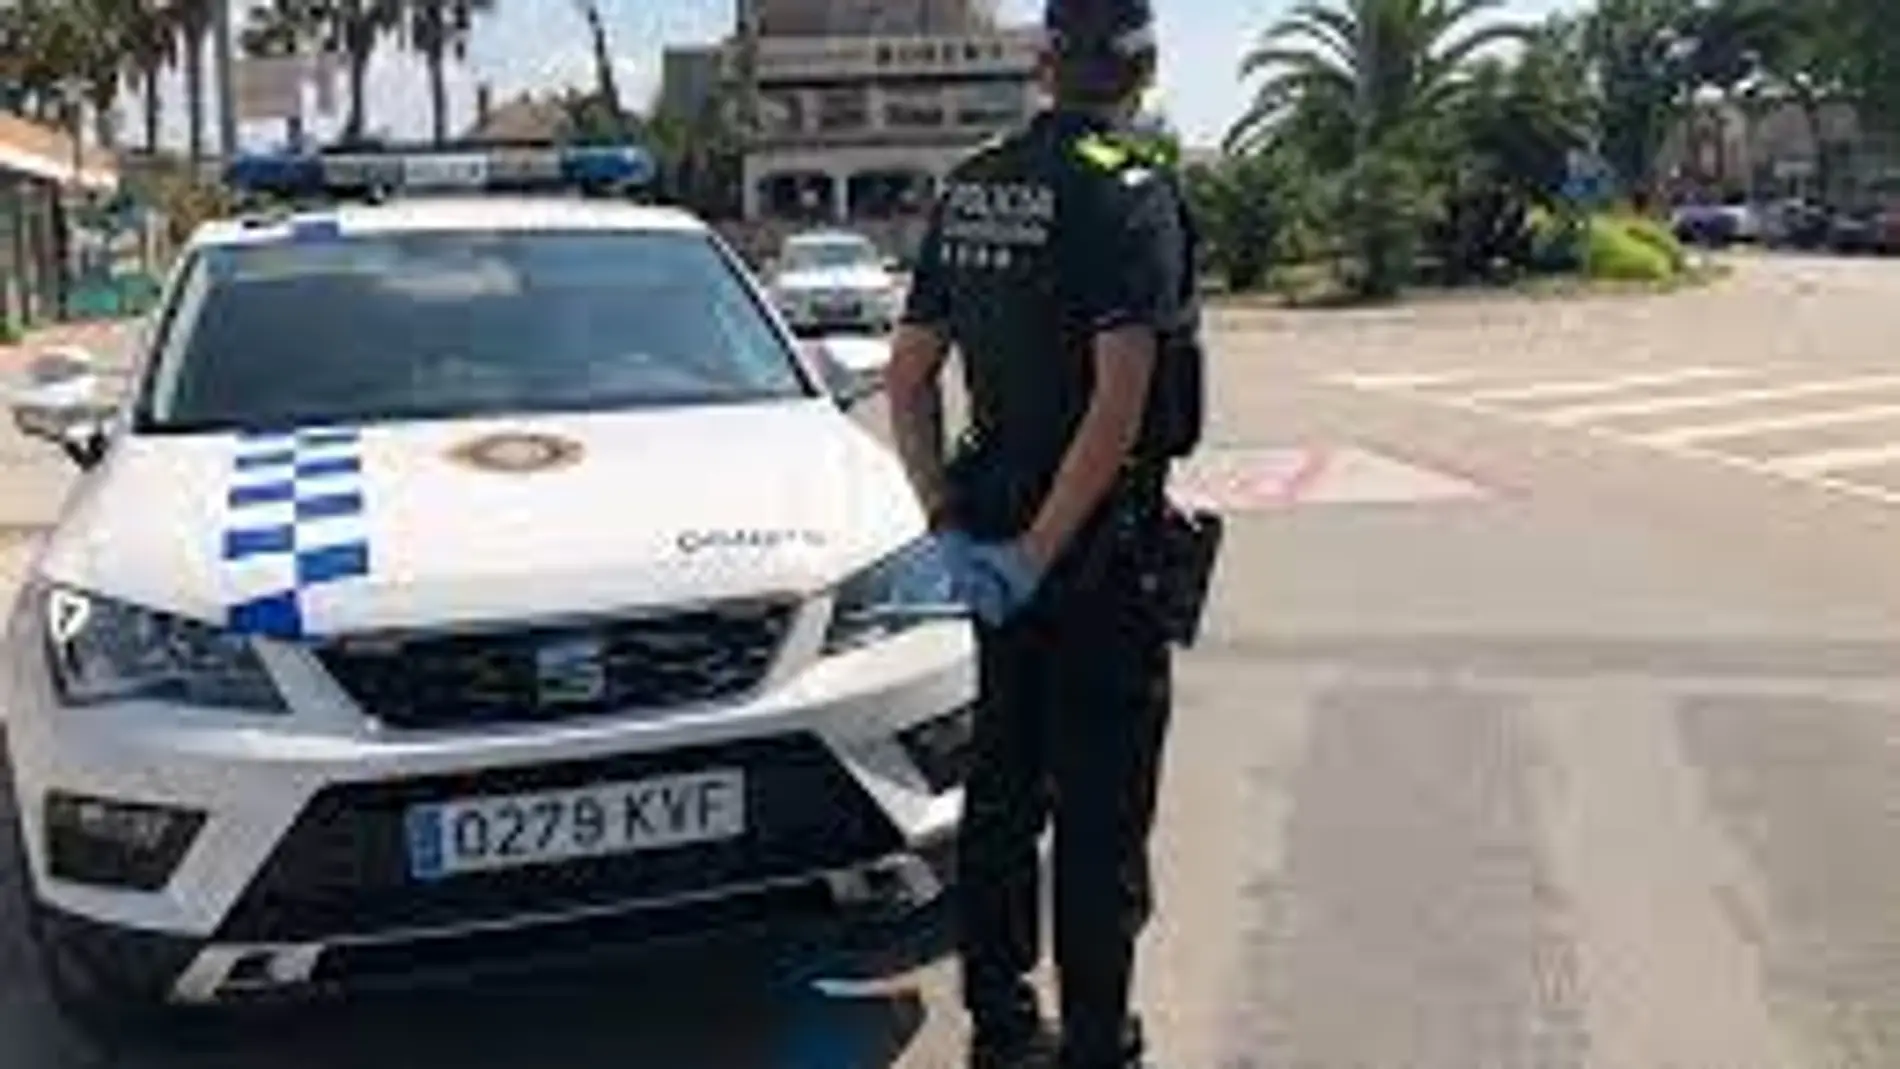 Patrulla de la Policía Local de Castelldefels